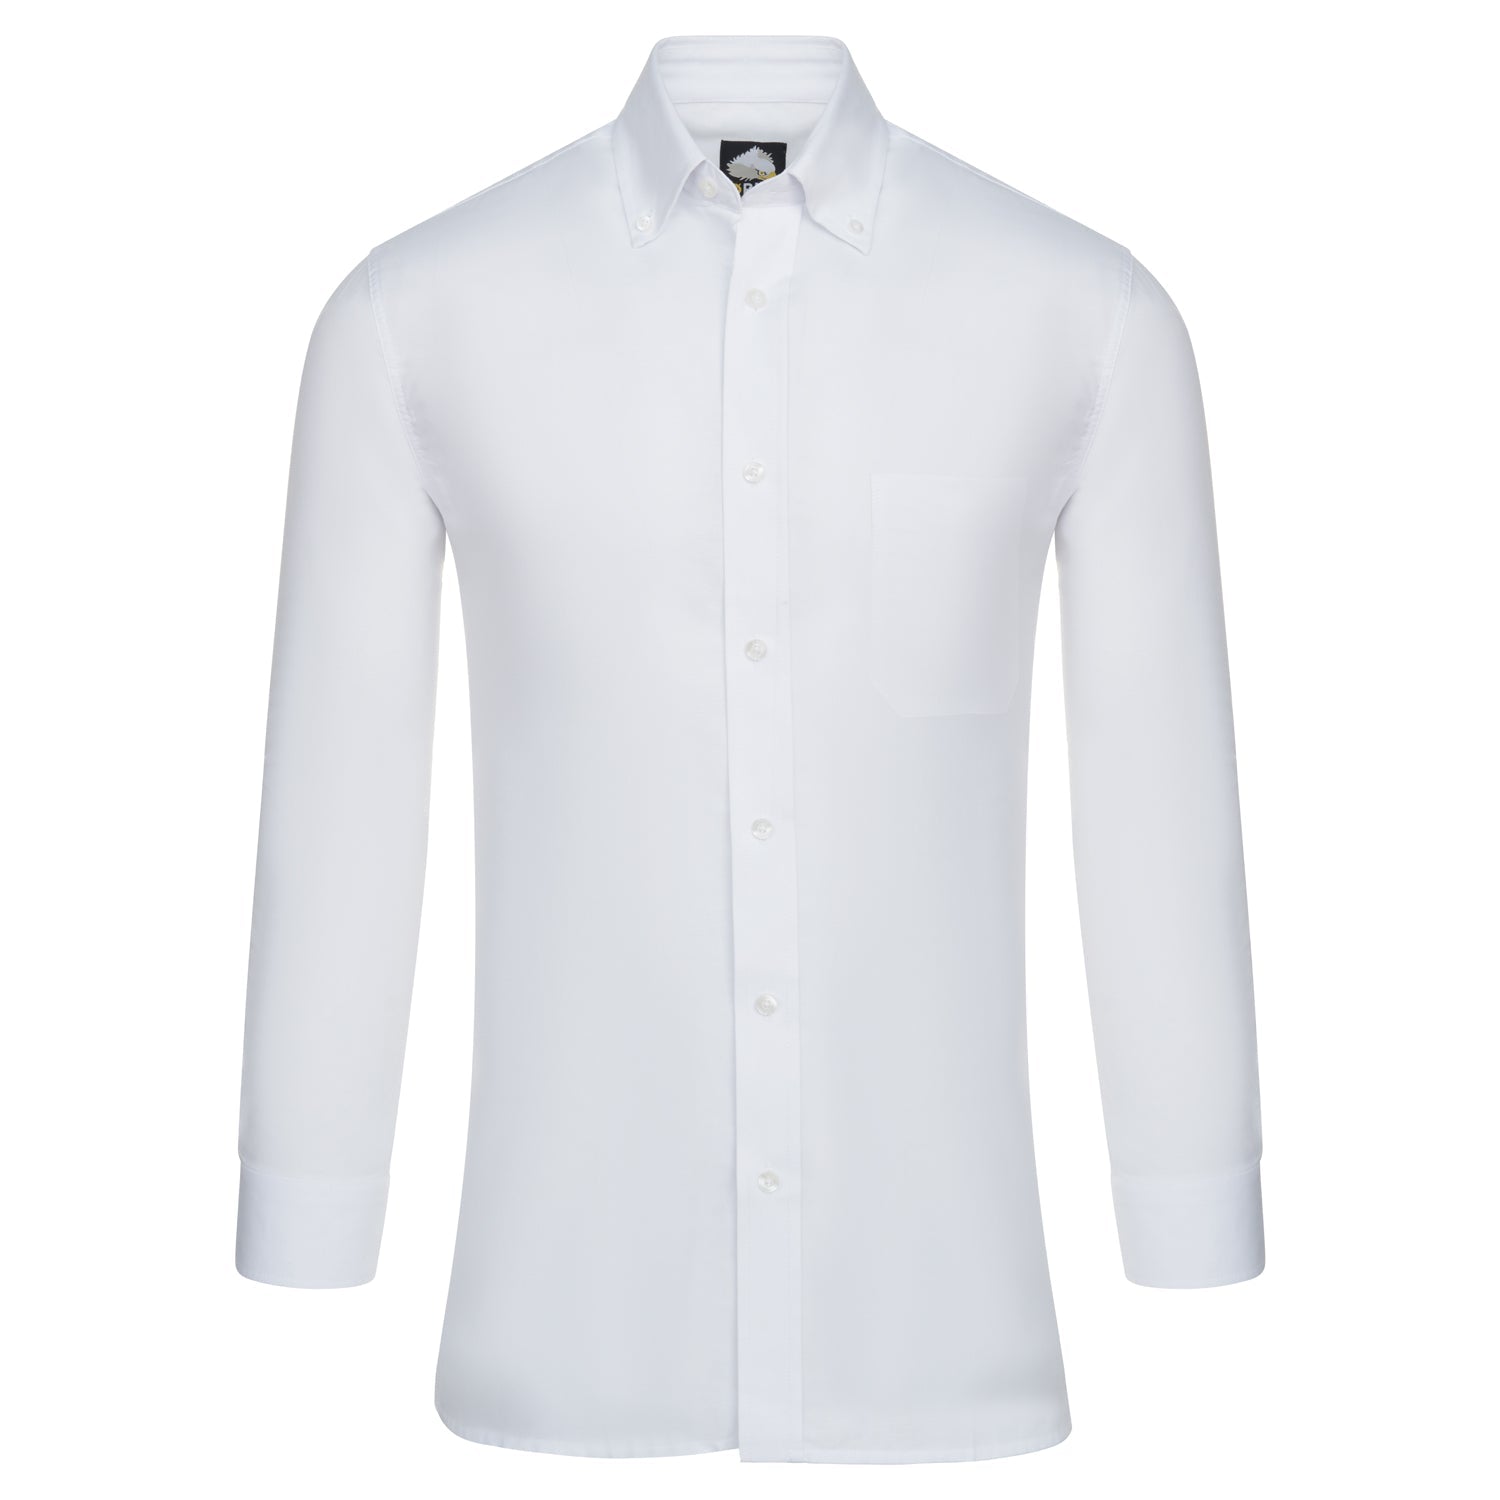 ORN Classic Oxford Long Sleeve Shirt - White